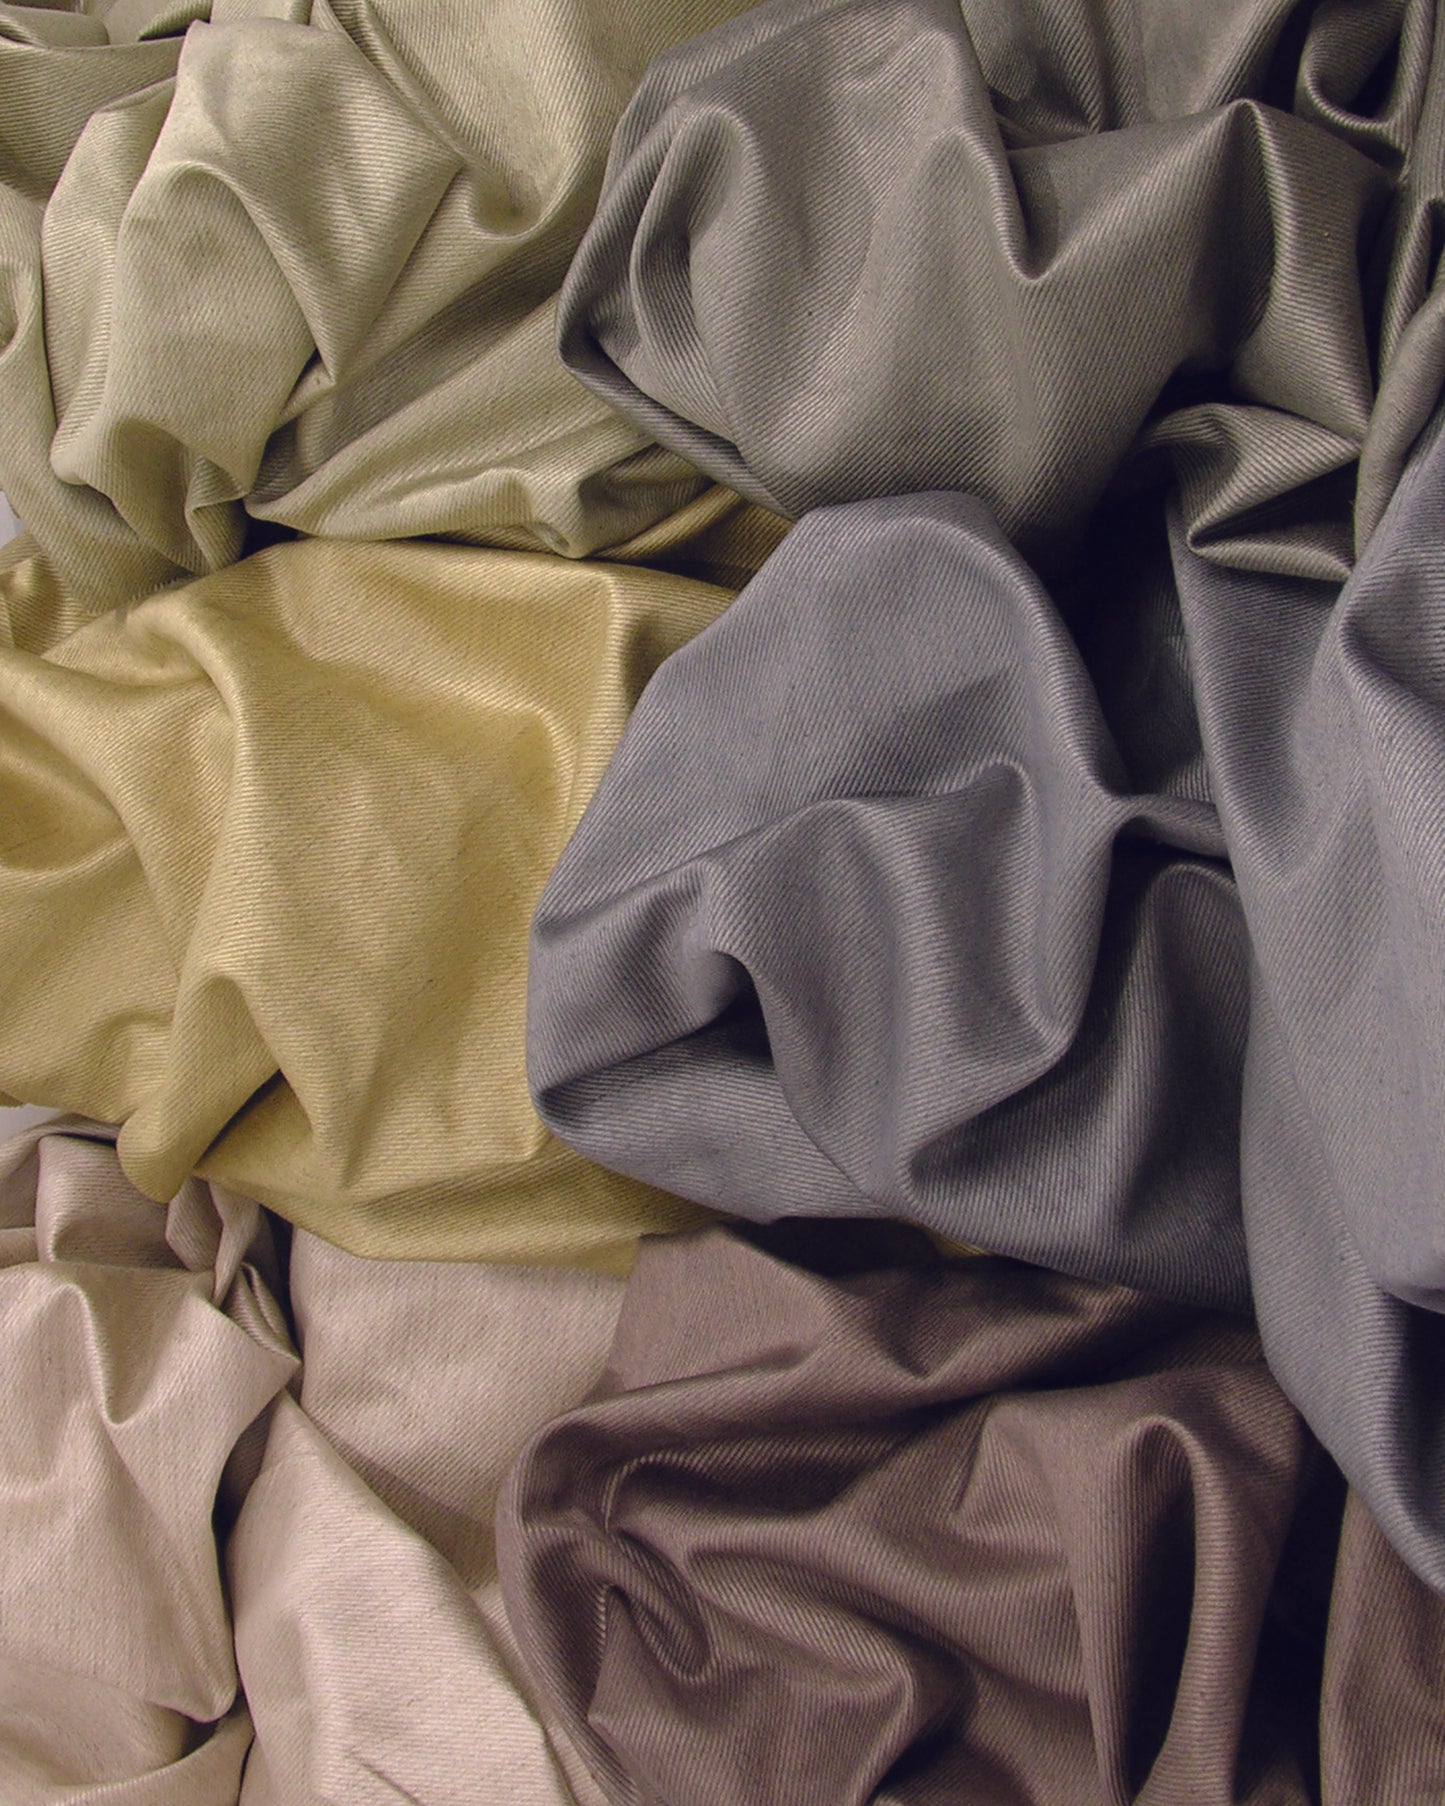 six crumpled twill upholstery fabrics